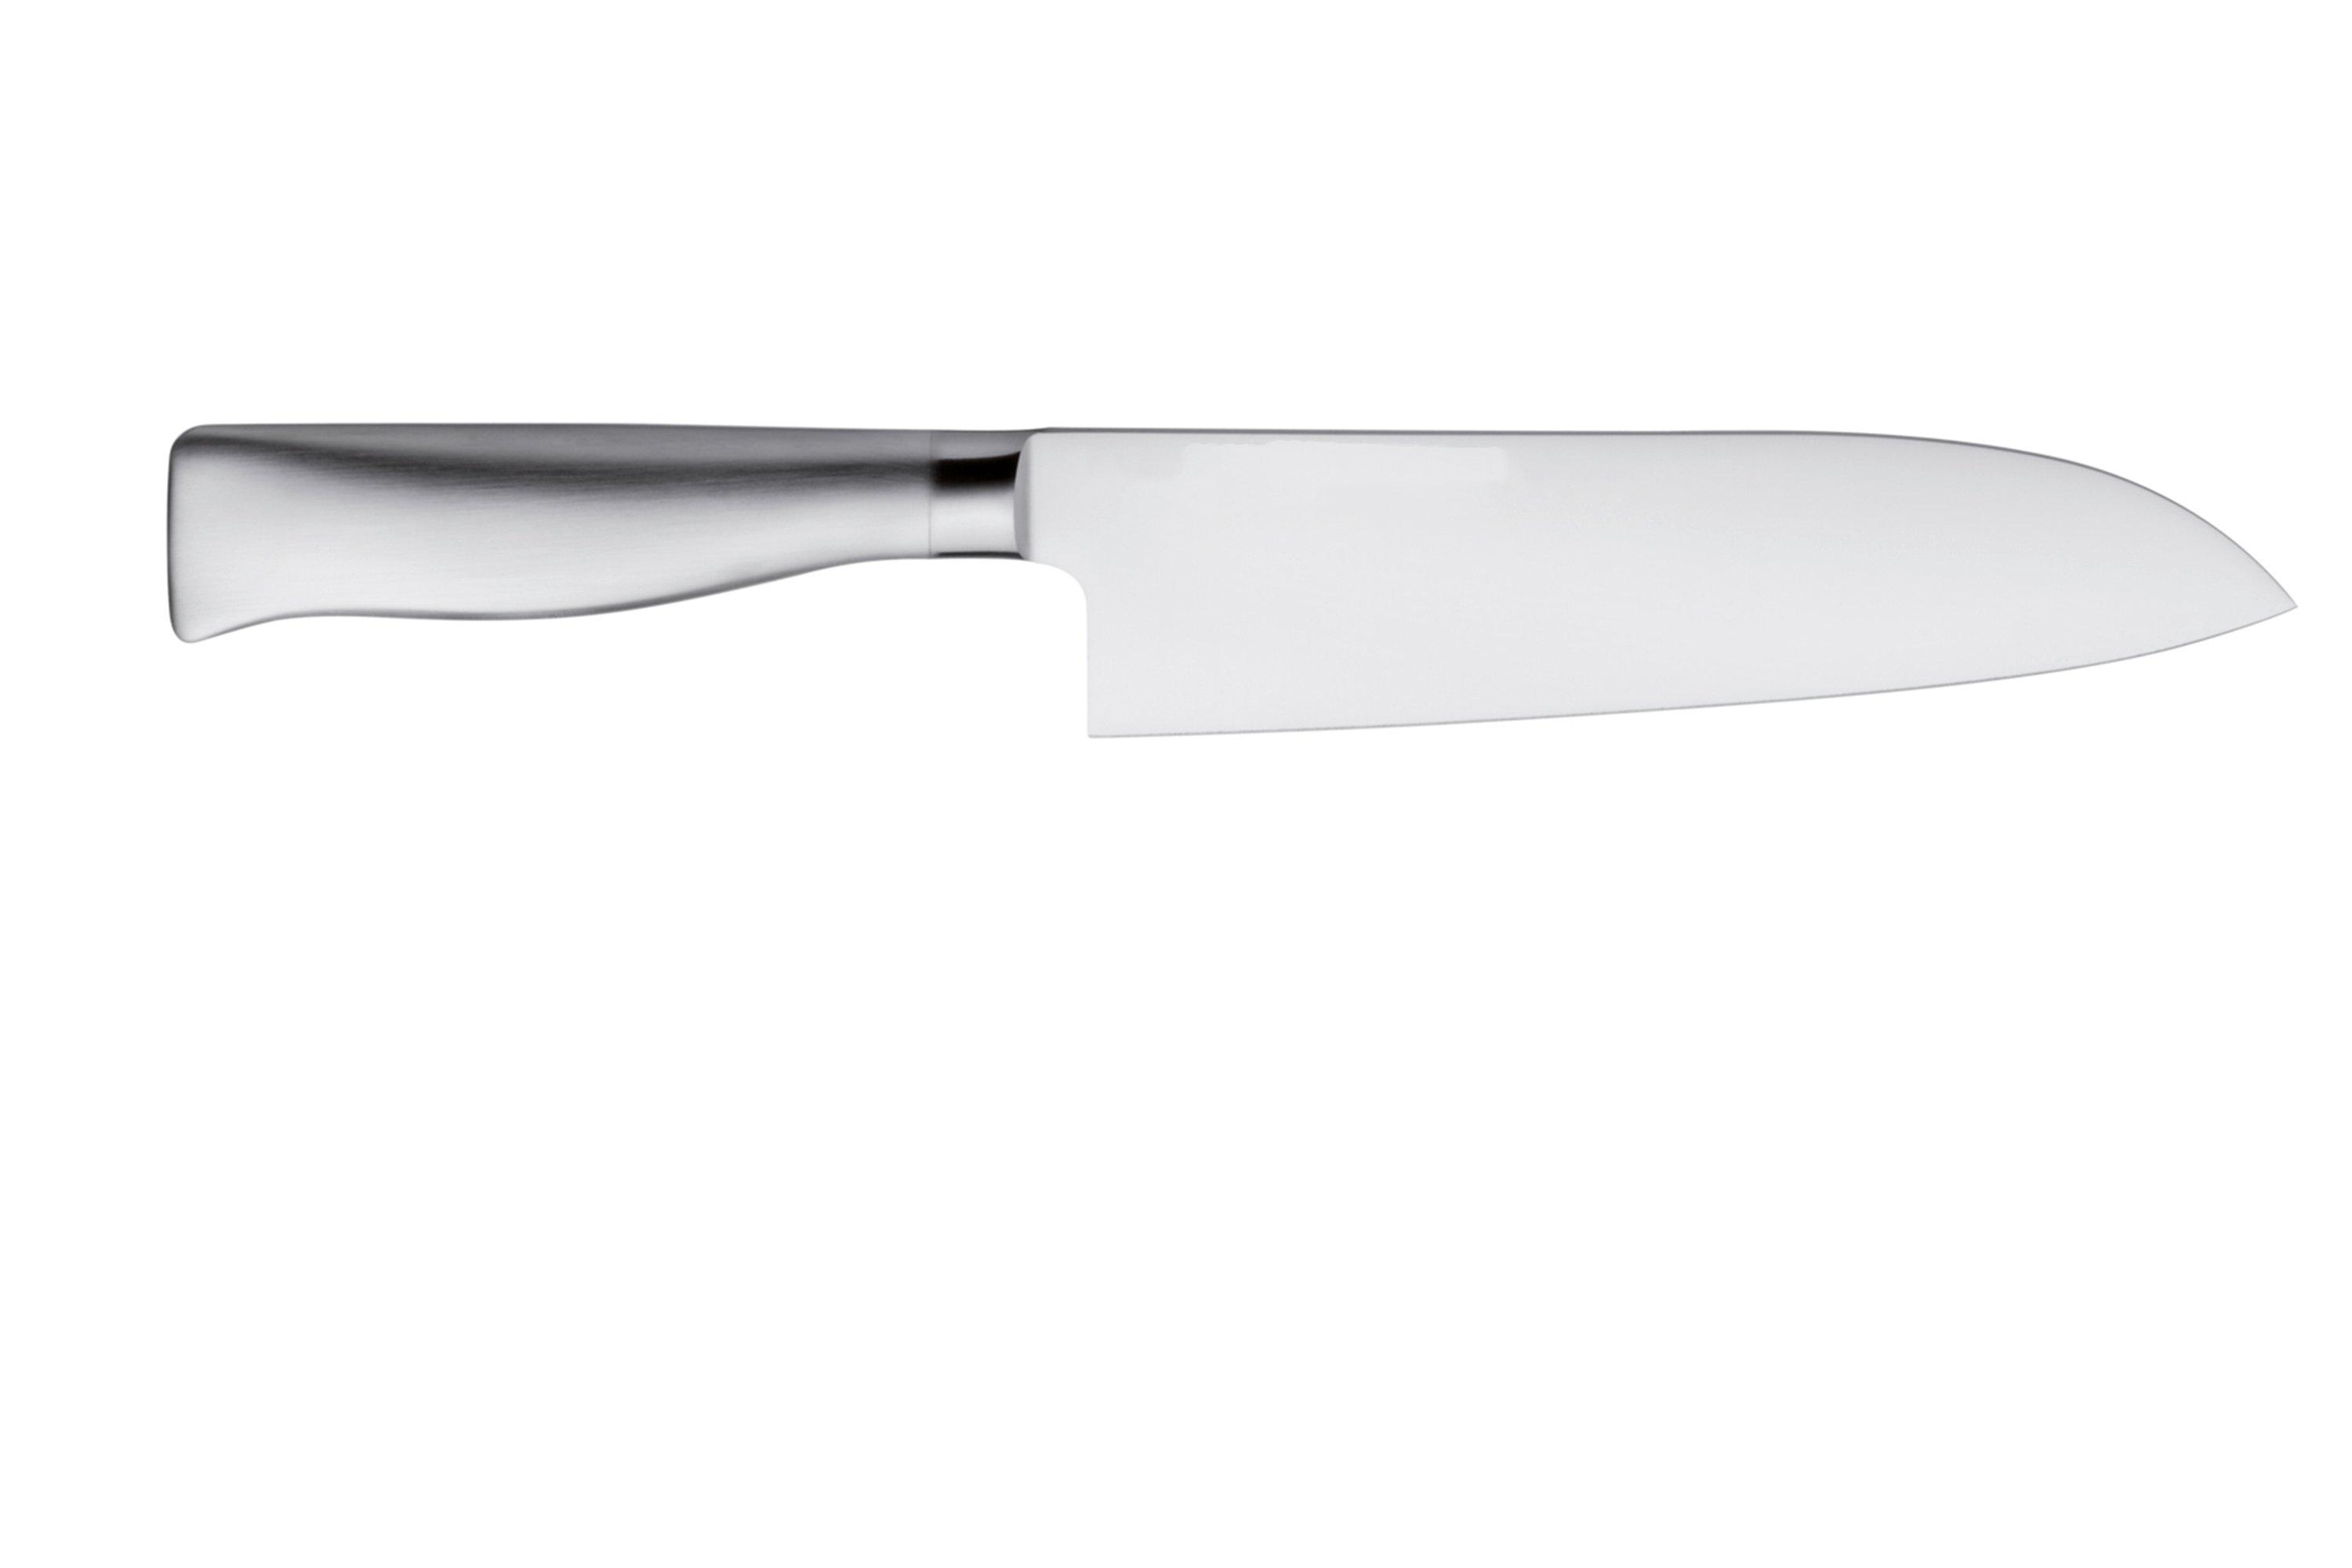 WMF Grand Gourmet 1882139992 2-piece Asian kitchen knife set |  Advantageously shopping at